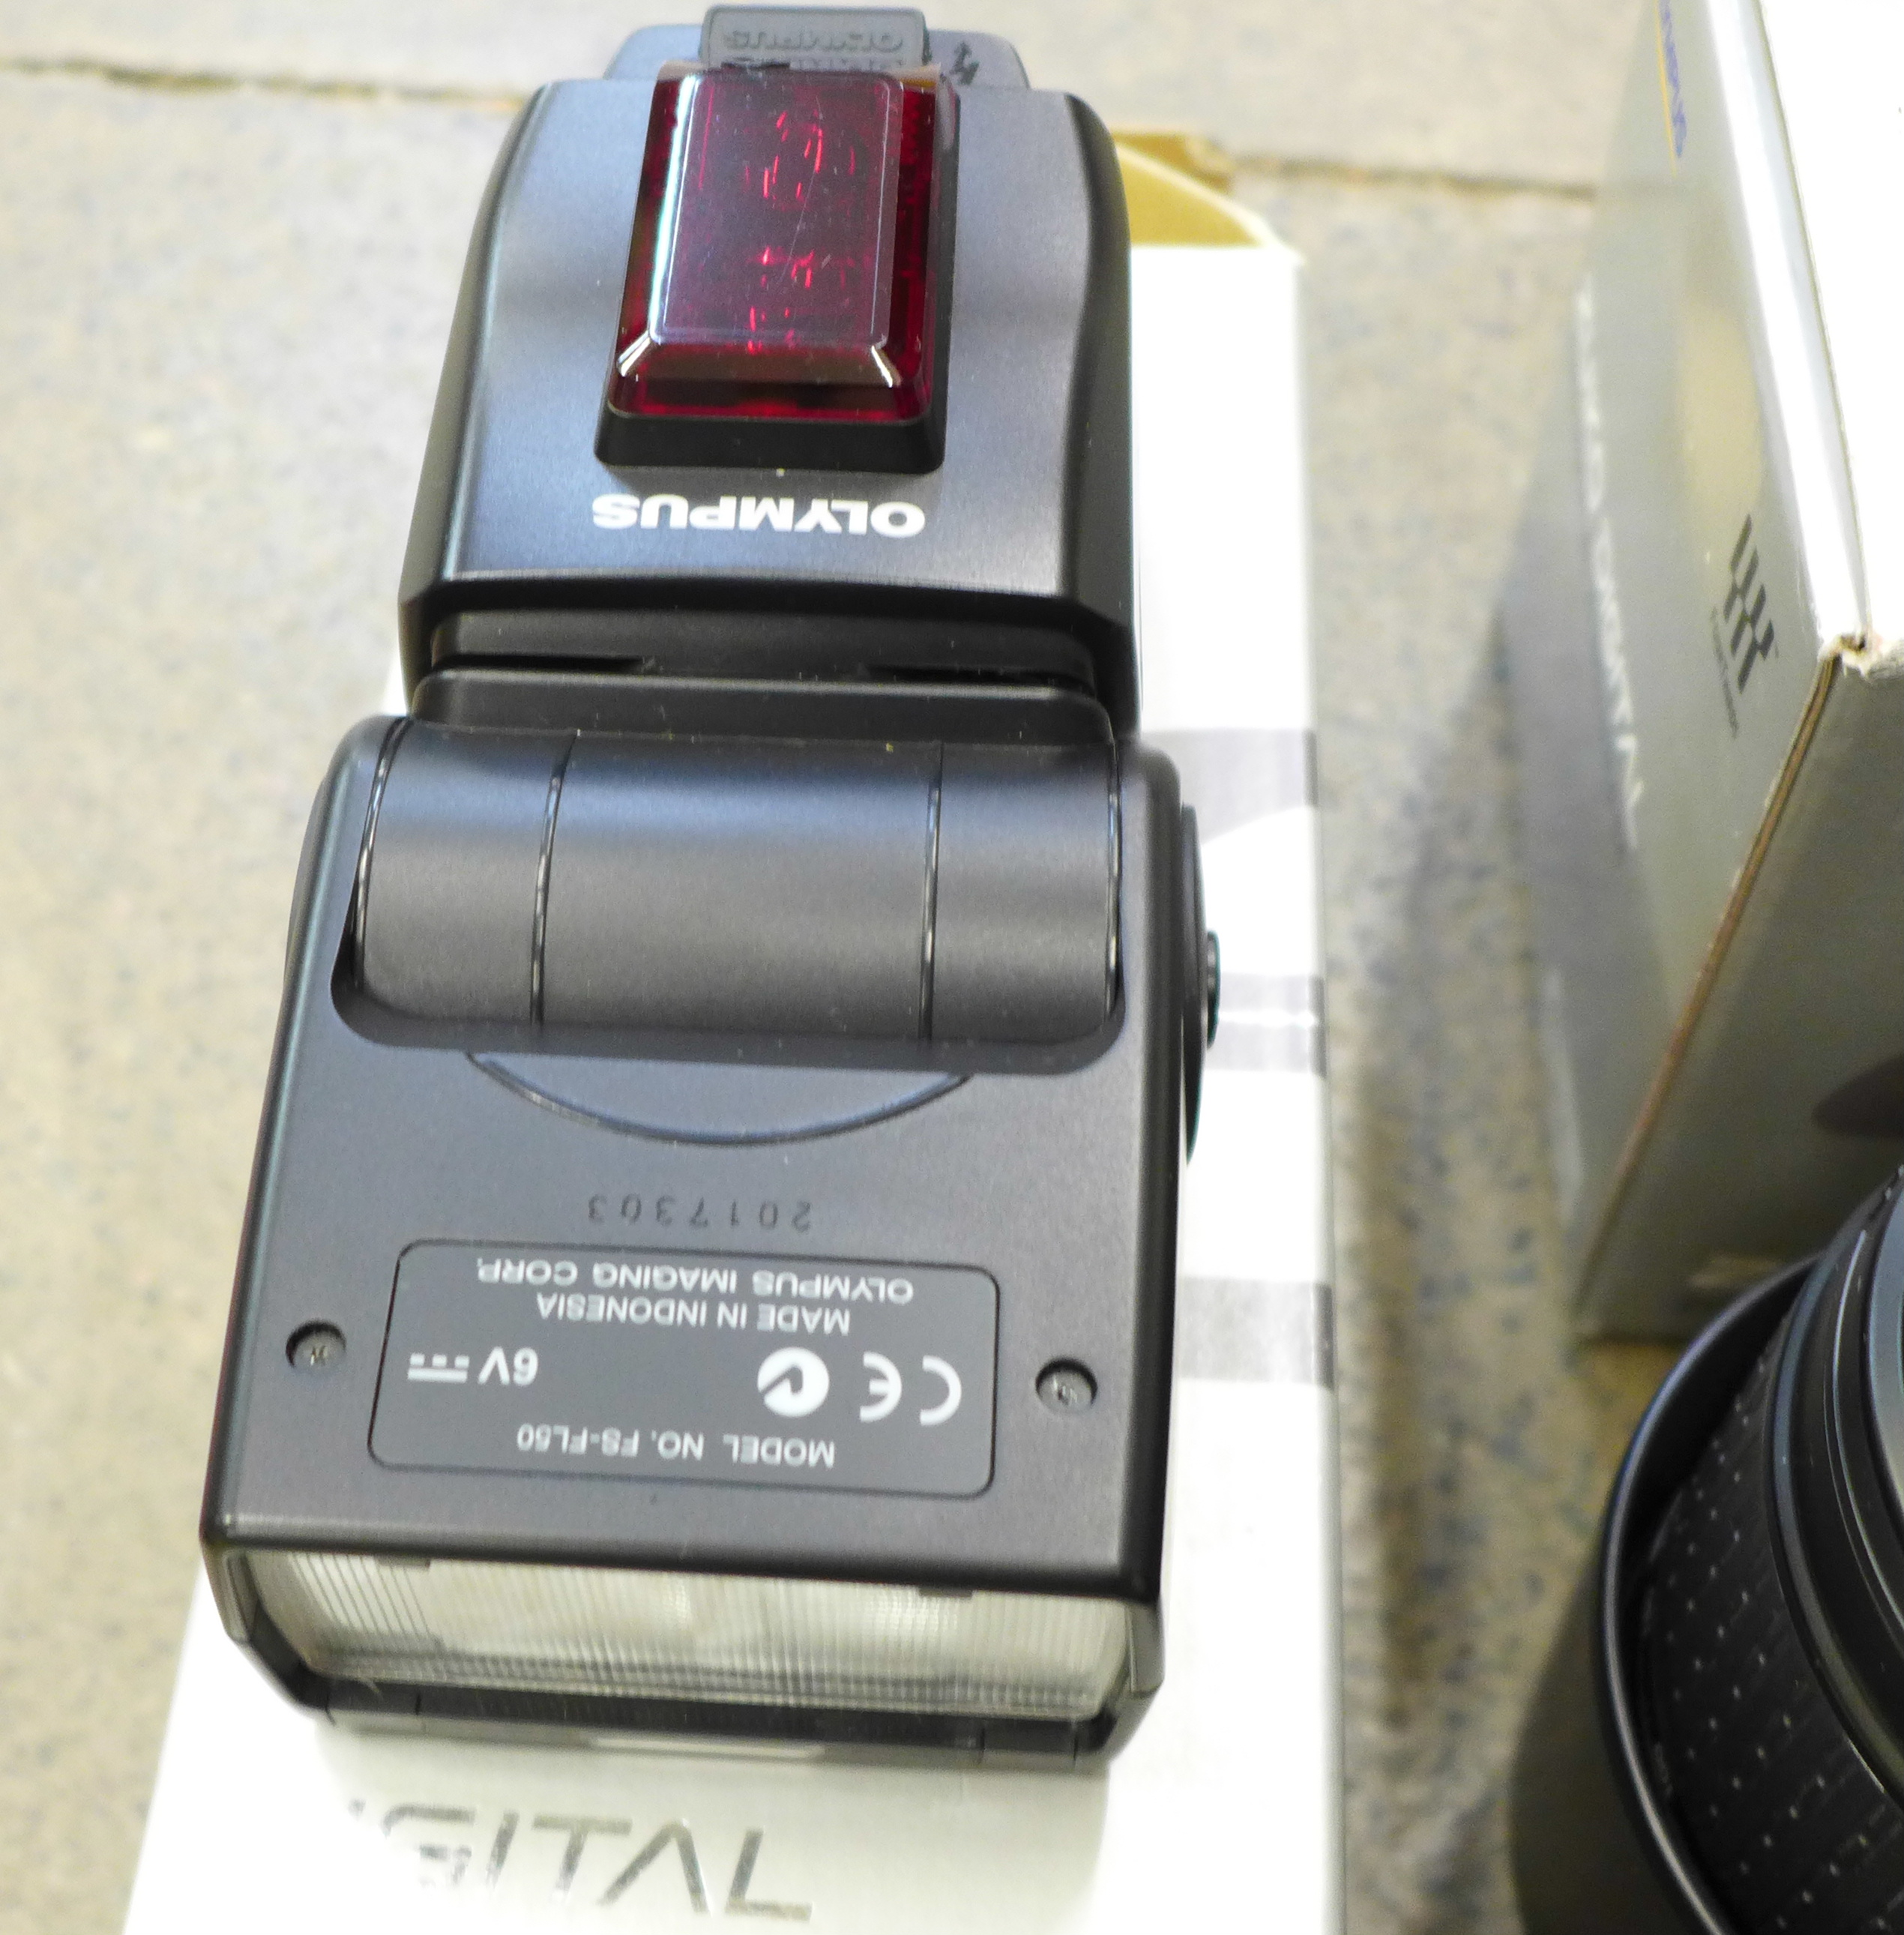 Six Olympus camera lenses including Zuiko digital ED 70-300mm, 200mm F4, 35mm, 28mm, 135mm, - Bild 2 aus 9